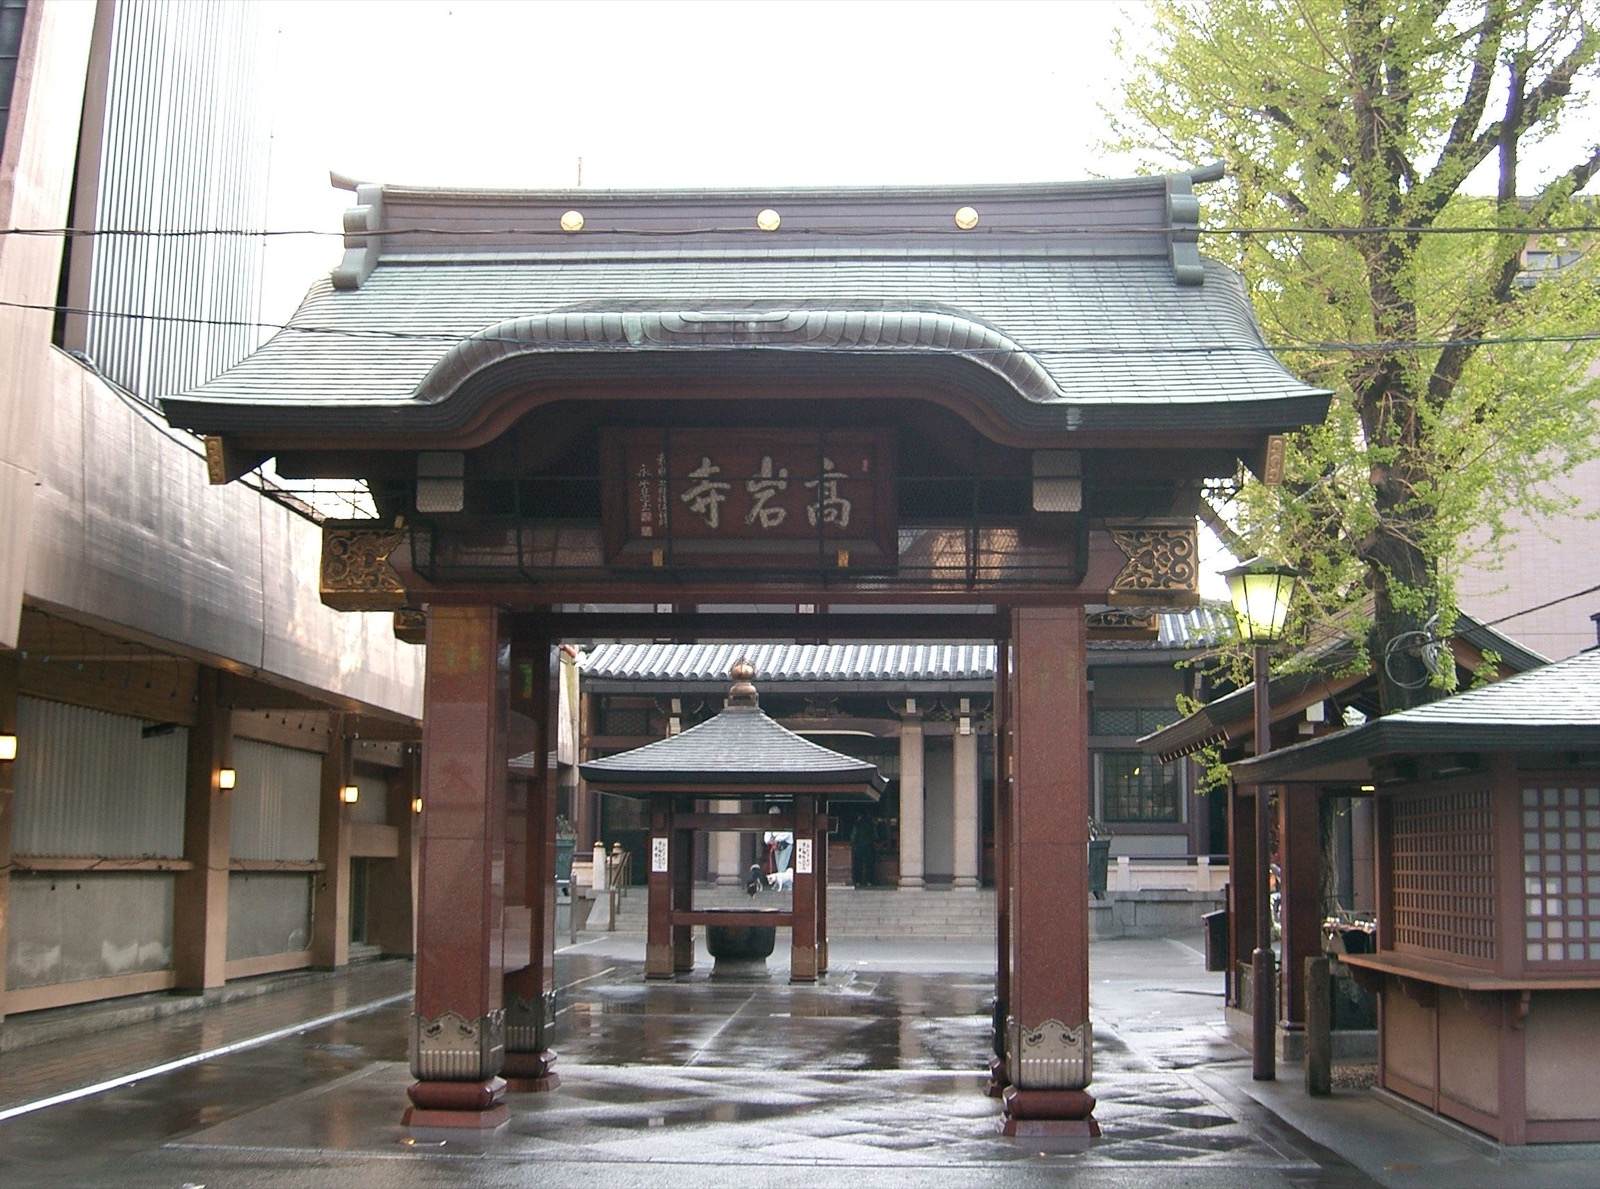 Photo of Koganji Temple, Japan (萬頂山 高岩寺 by KENPEI)